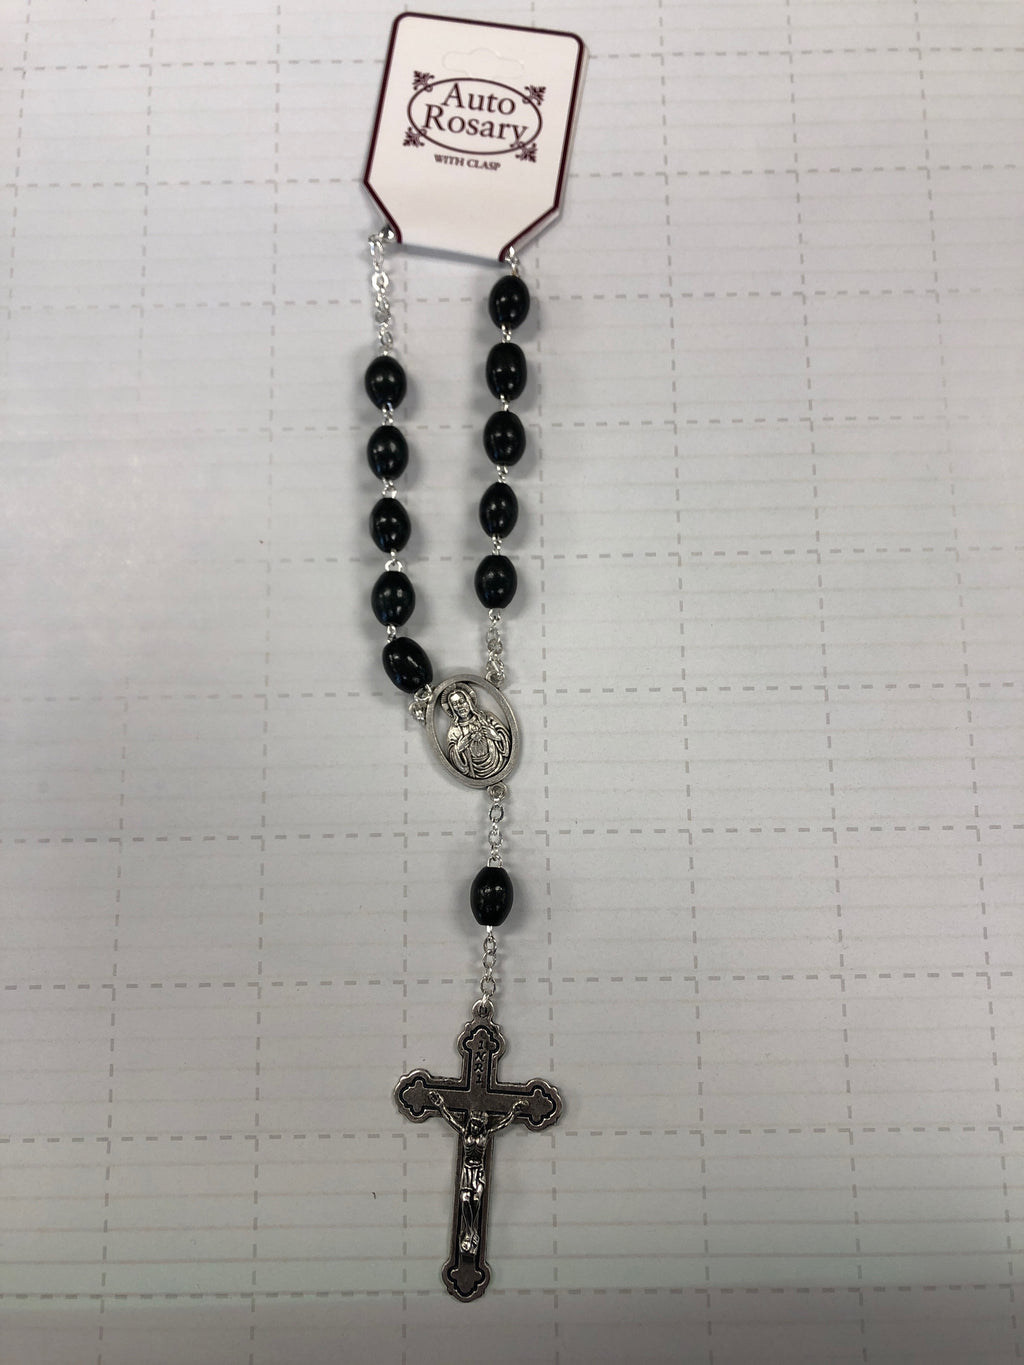 Auto rosary wood black